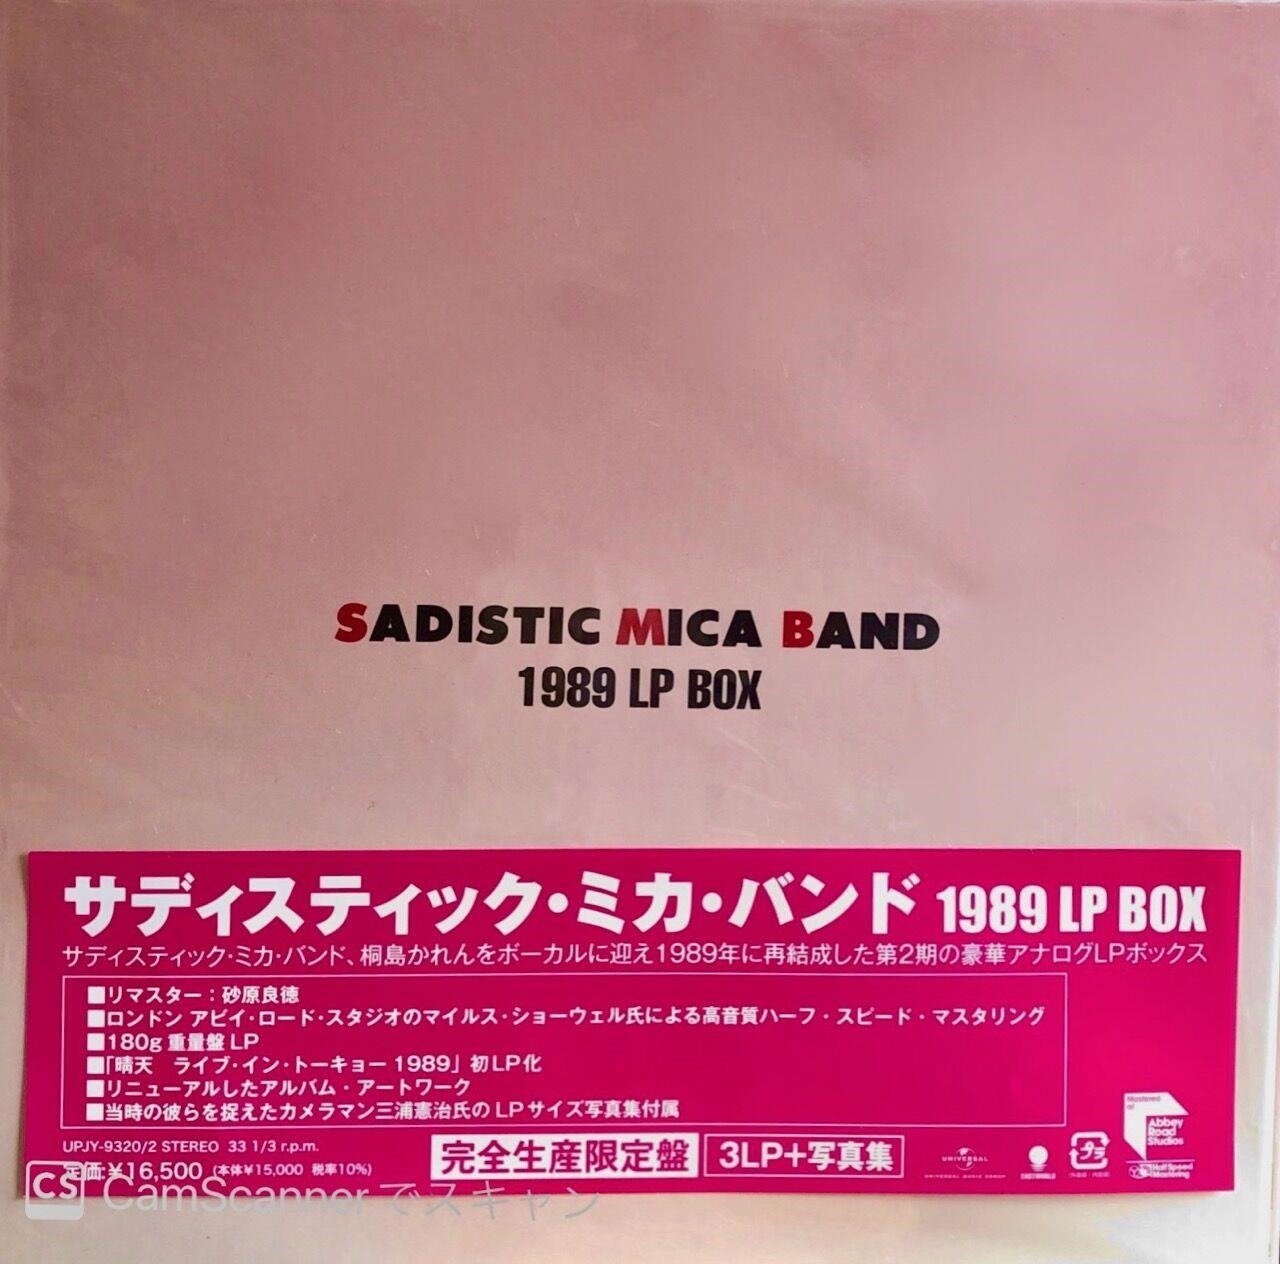 CD Shop - SADISTIC MIKA BAND 1989 LP BOX